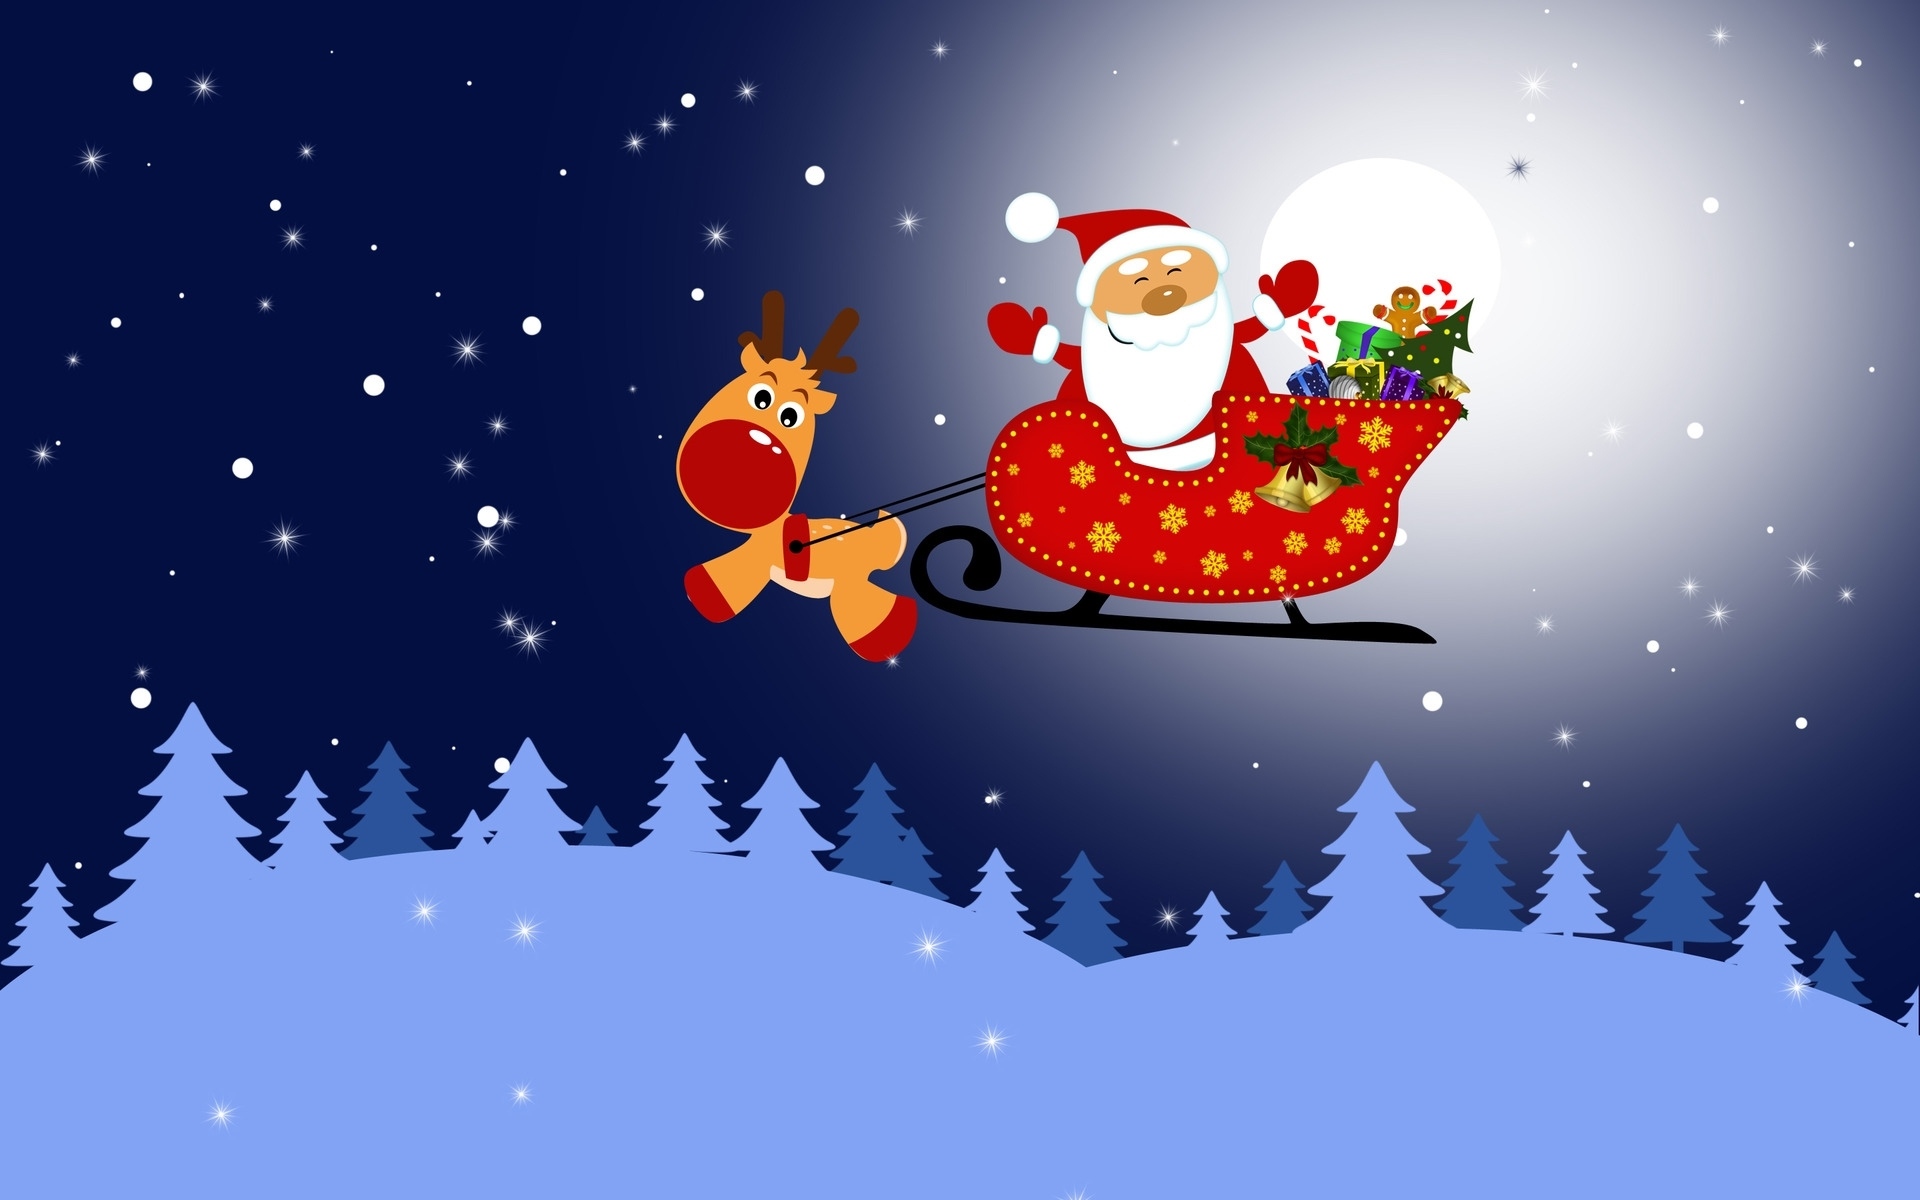 blue, santa claus, holiday, christmas, moon, reindeer, sleigh, snow